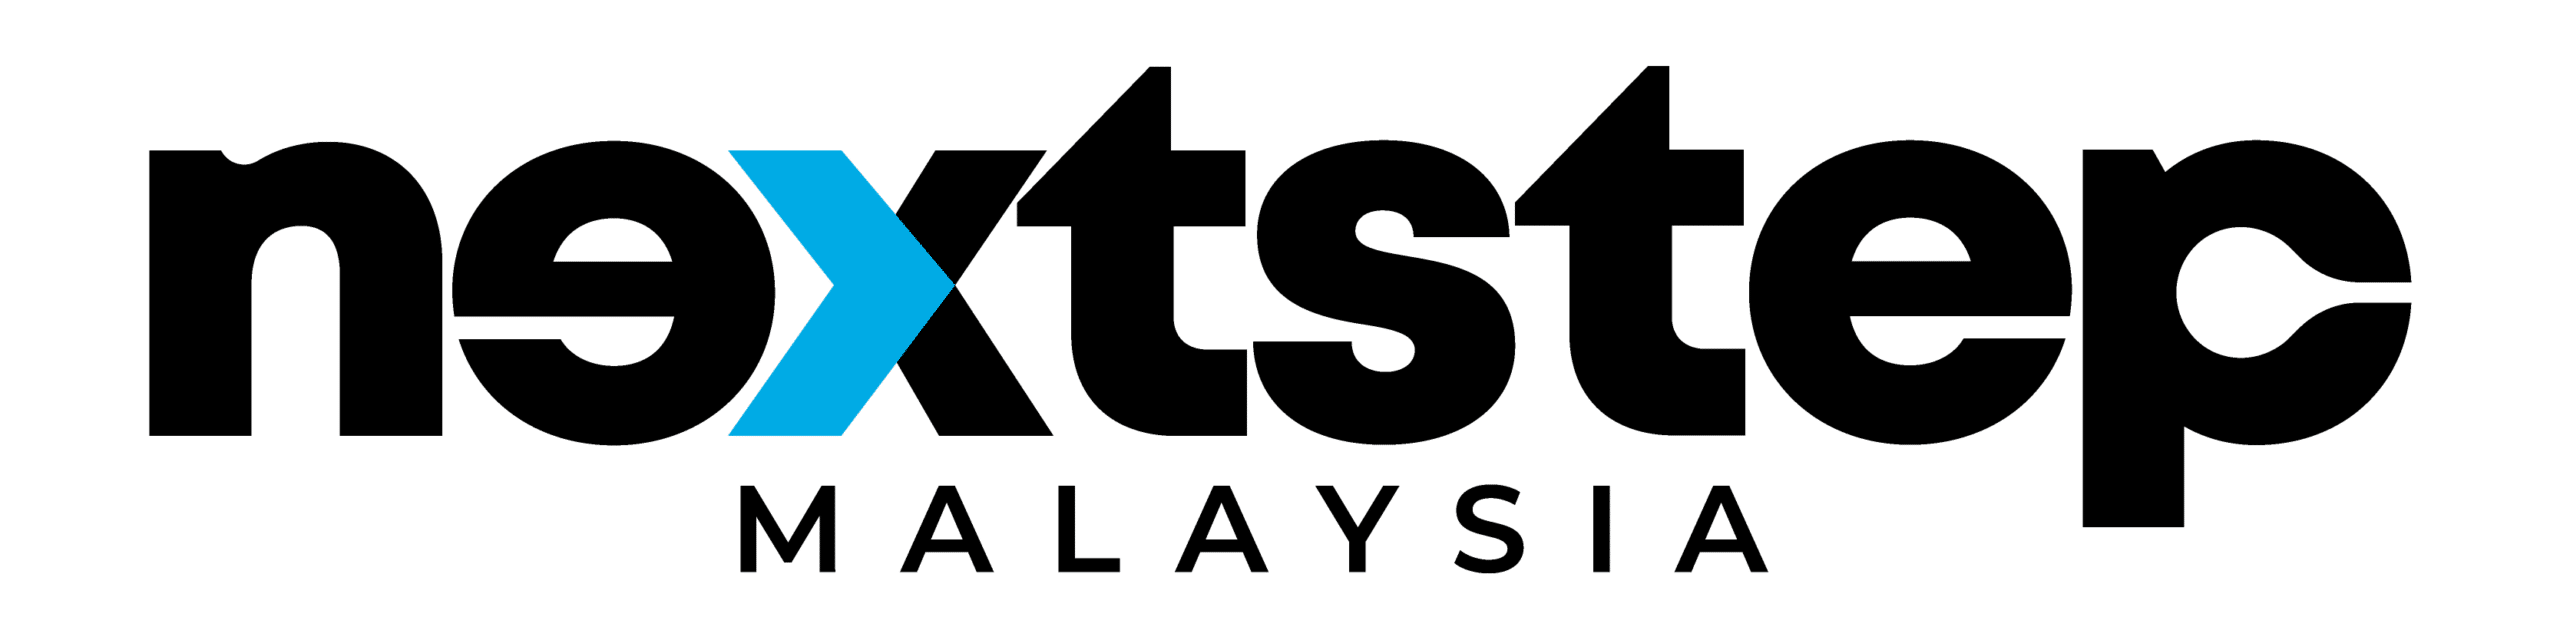 NEXTSTEP MALAYSIA Logo